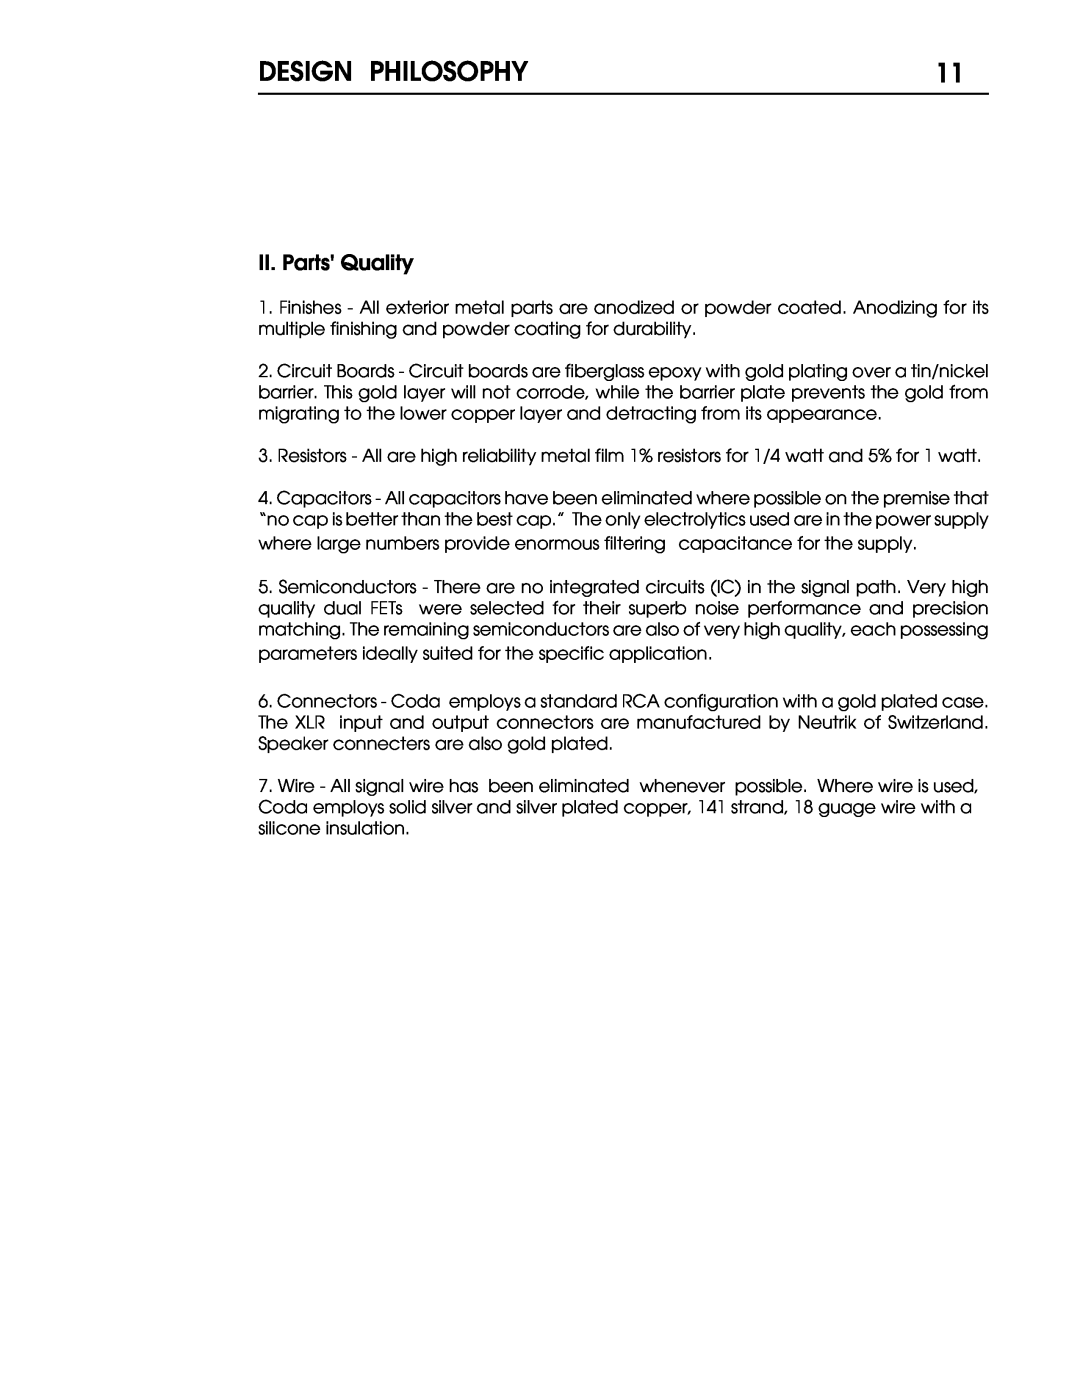 Coda V10 operation manual Design Philosophy, II. Parts Quality 